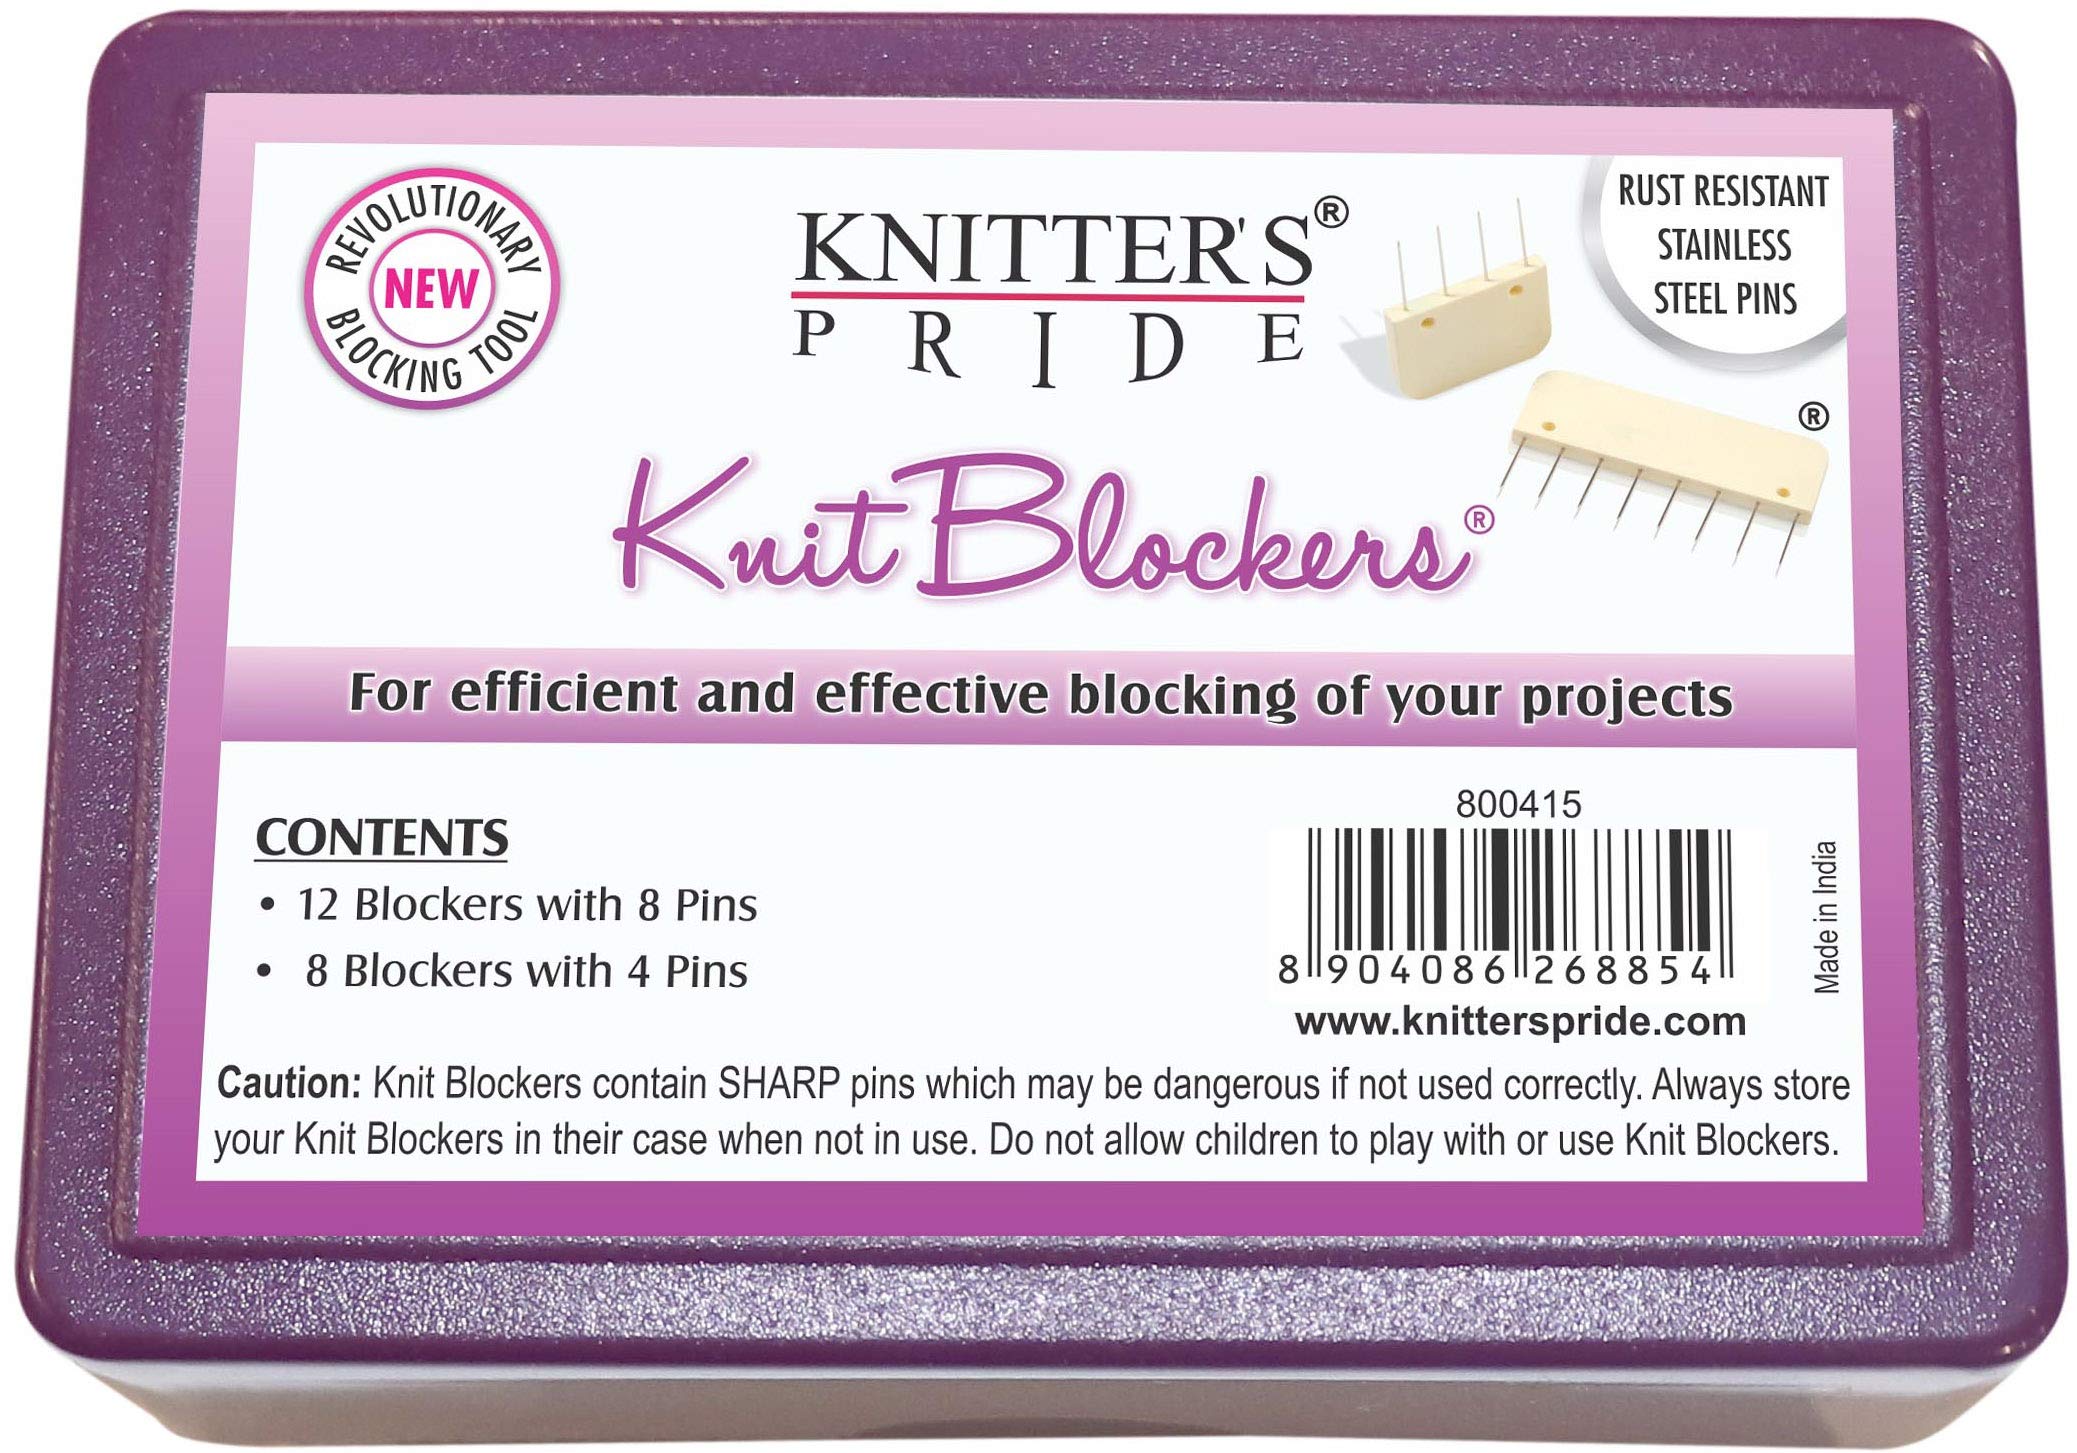 Knitter's Pride Knitter's Knit Blocking & Pins Kit